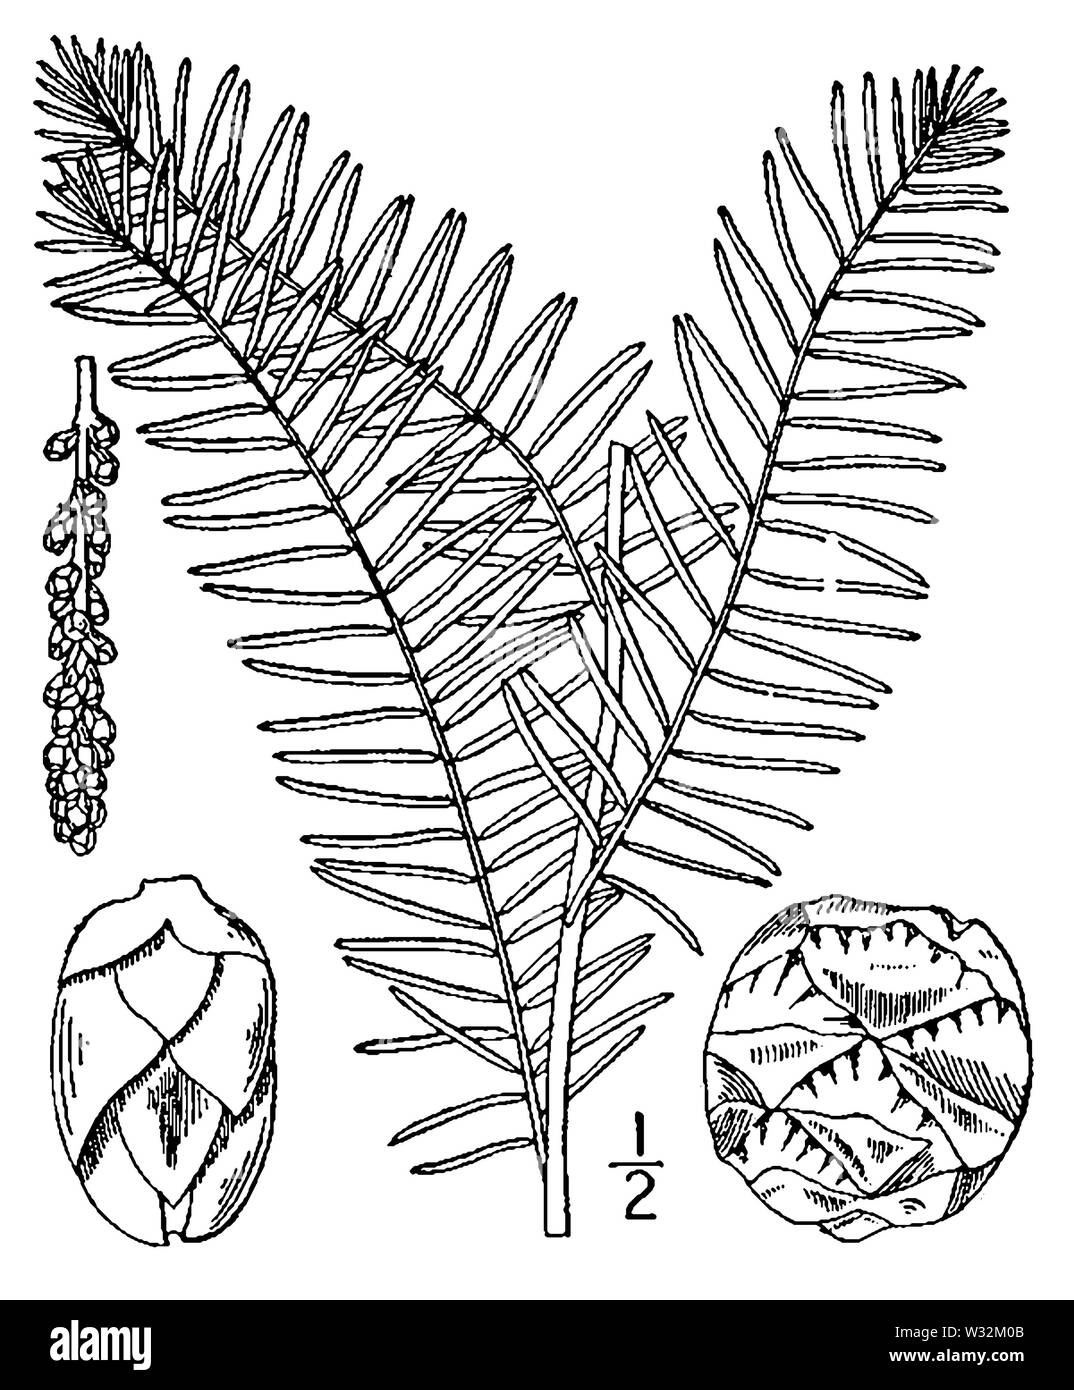 Taxodium distichum drawing Stock Photo